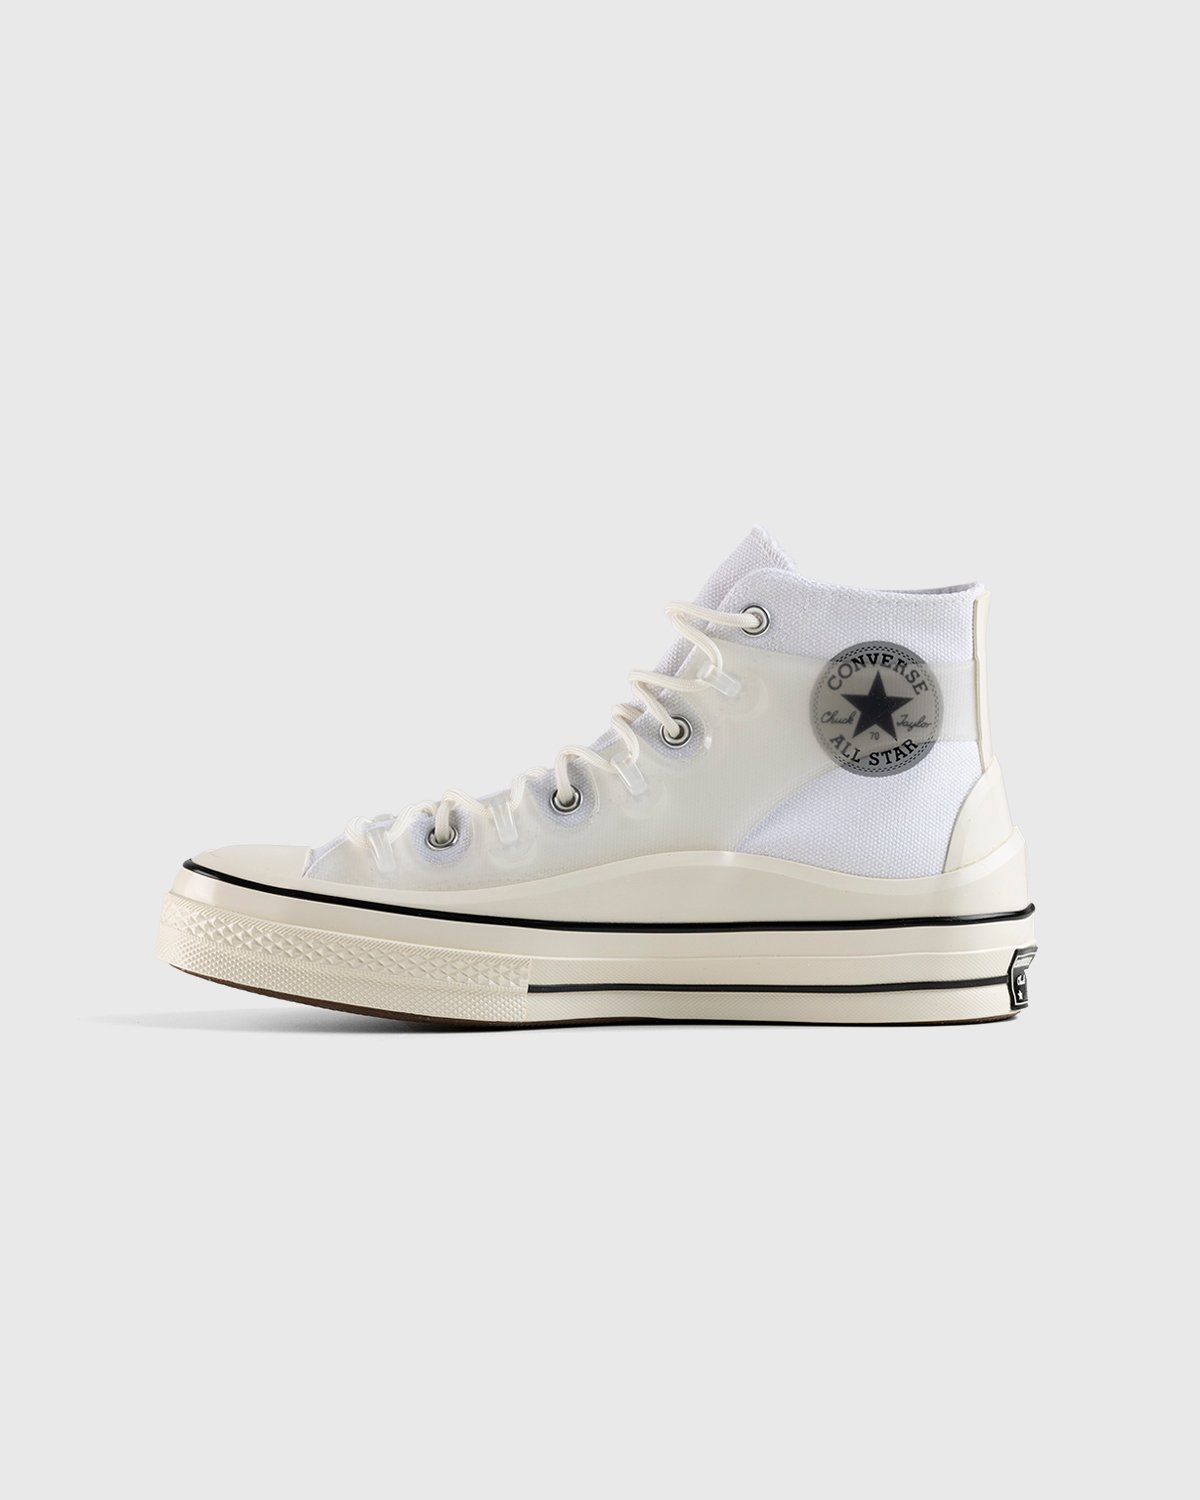 Converse - Chuck 70 Utility Hi White/Egret/Black - Footwear - White - Image 2